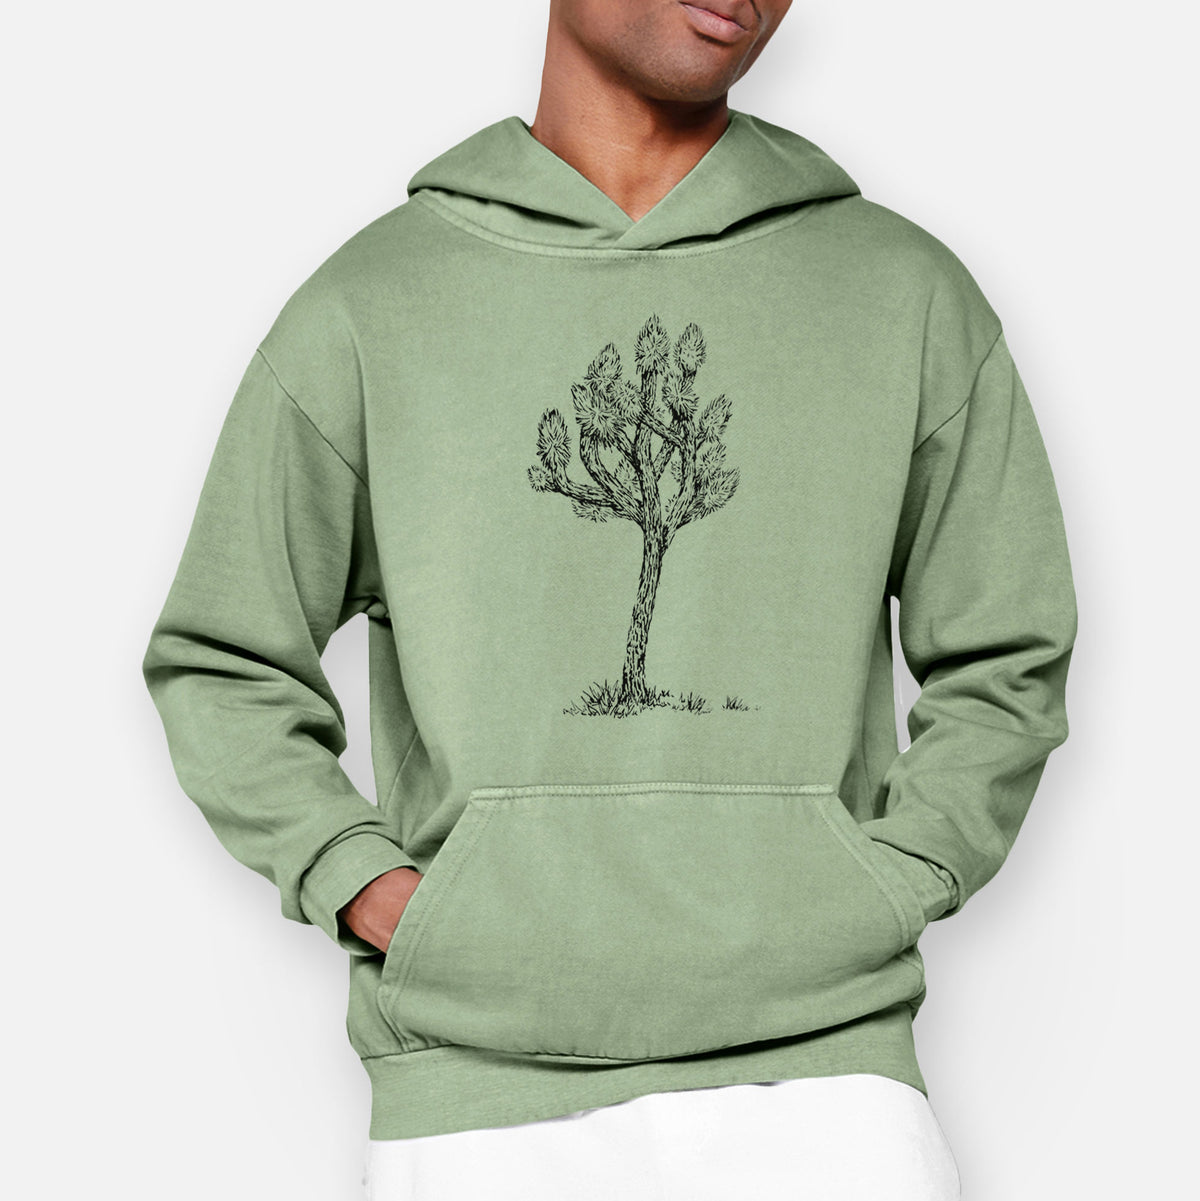 Yucca brevifolia - Joshua Tree  - Urban Heavyweight Hoodie